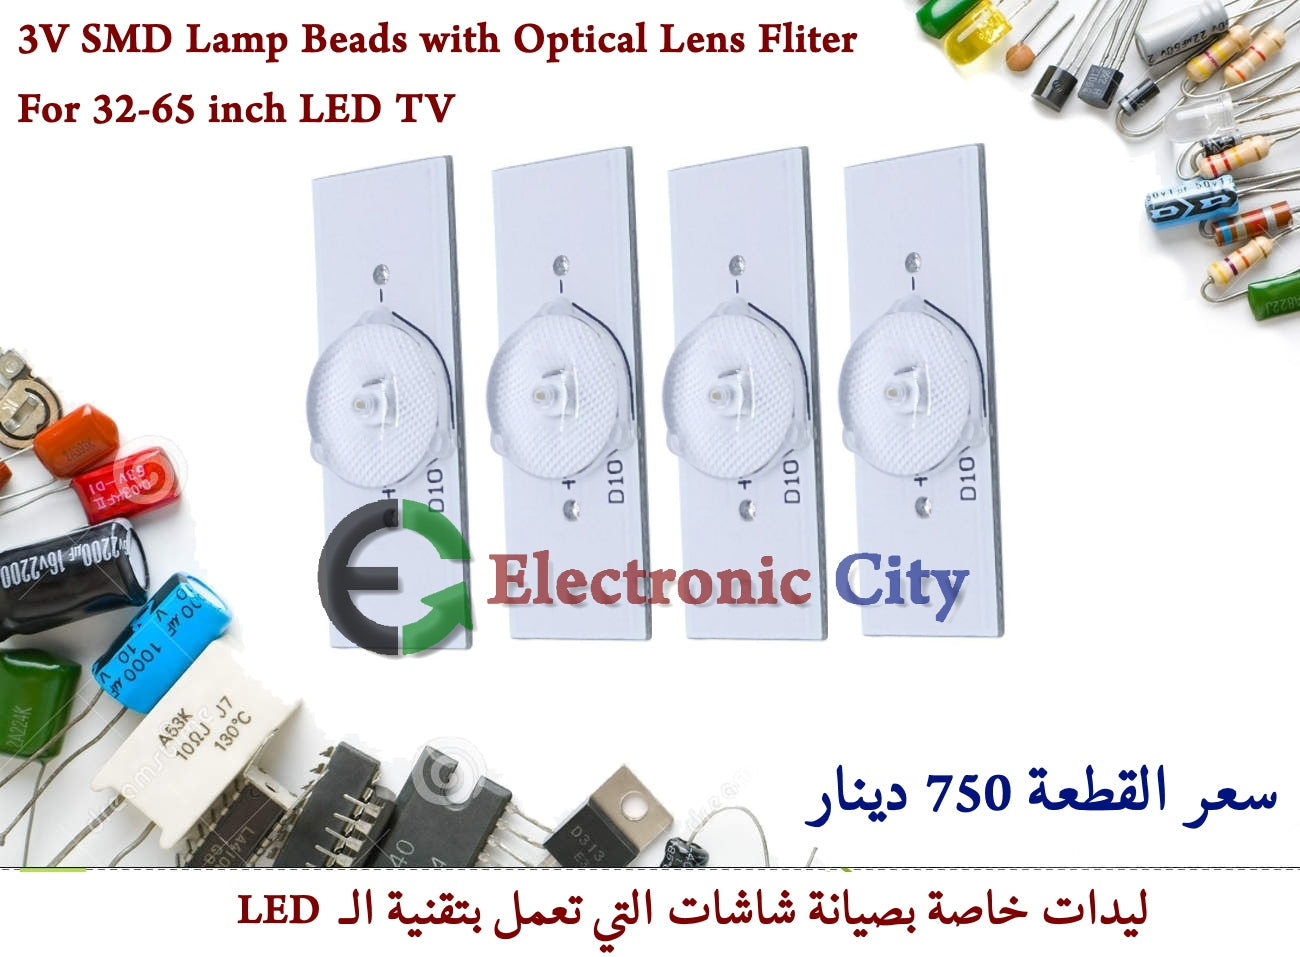 3V SMD Lamp Beads with Optical Lens Fliter for 32-65 inch LED TV #Q3